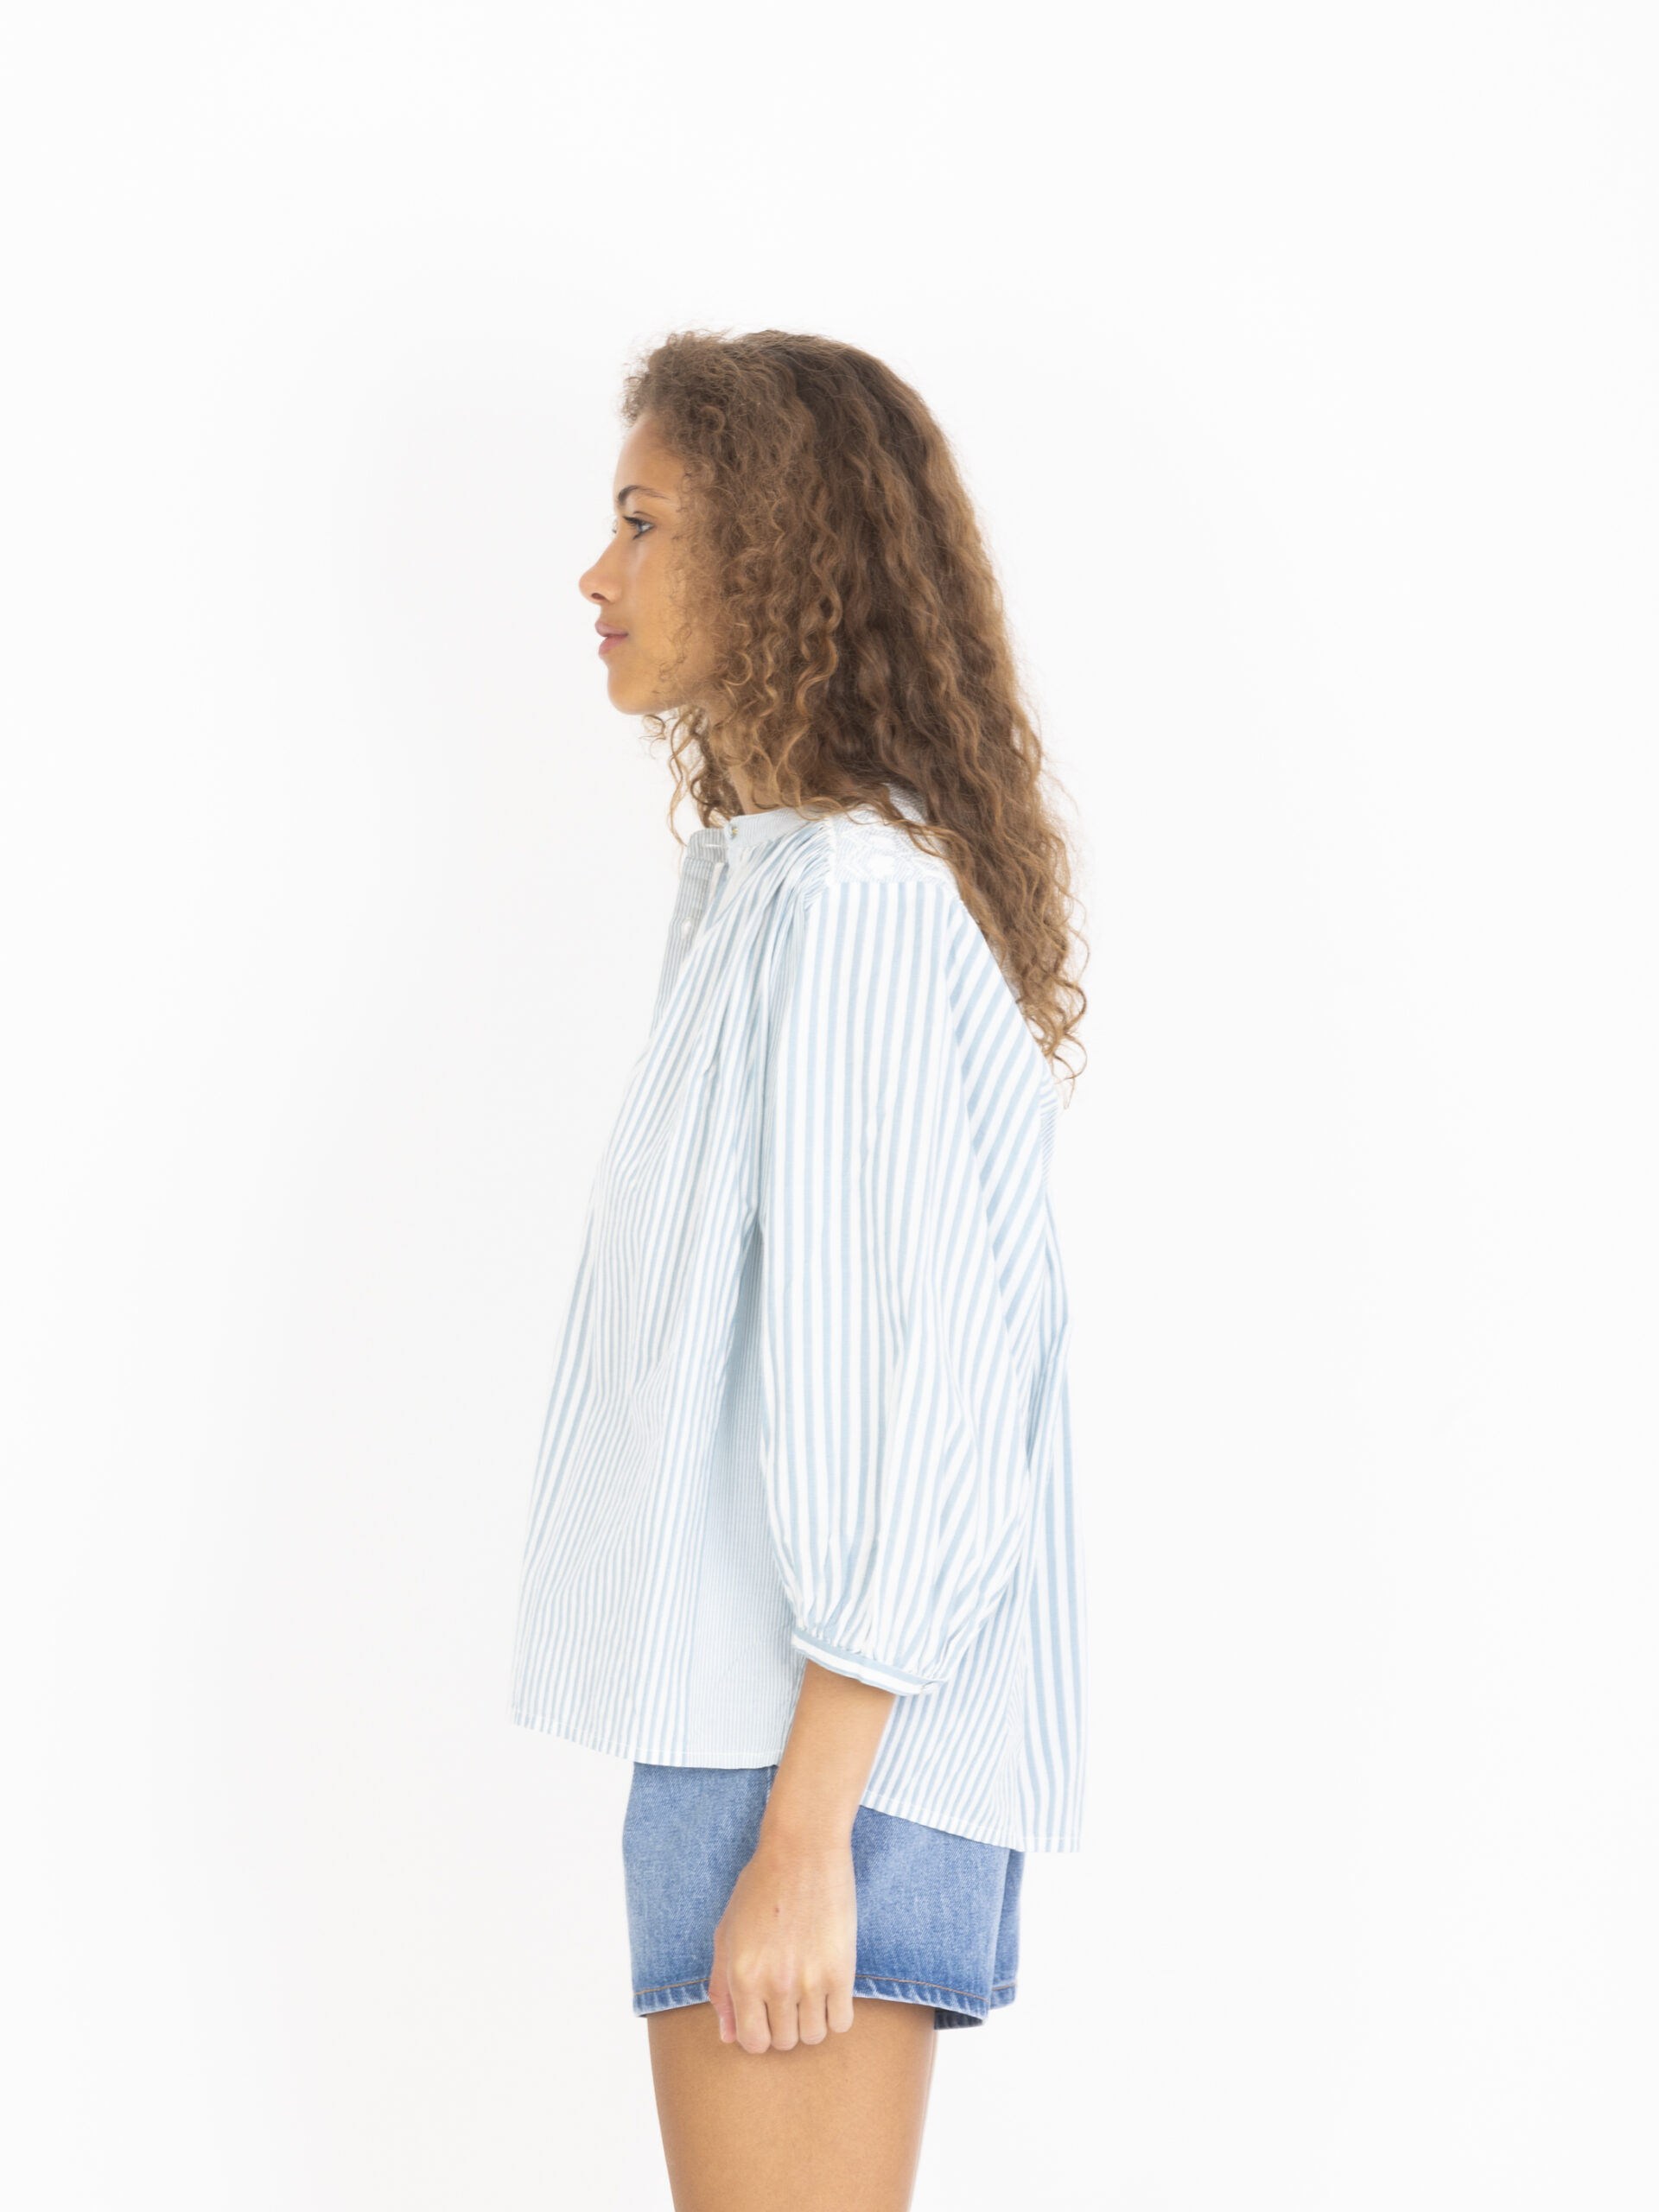 jeannali-shirt-blouse-striped-cotton-louise-misha-matchboxathens